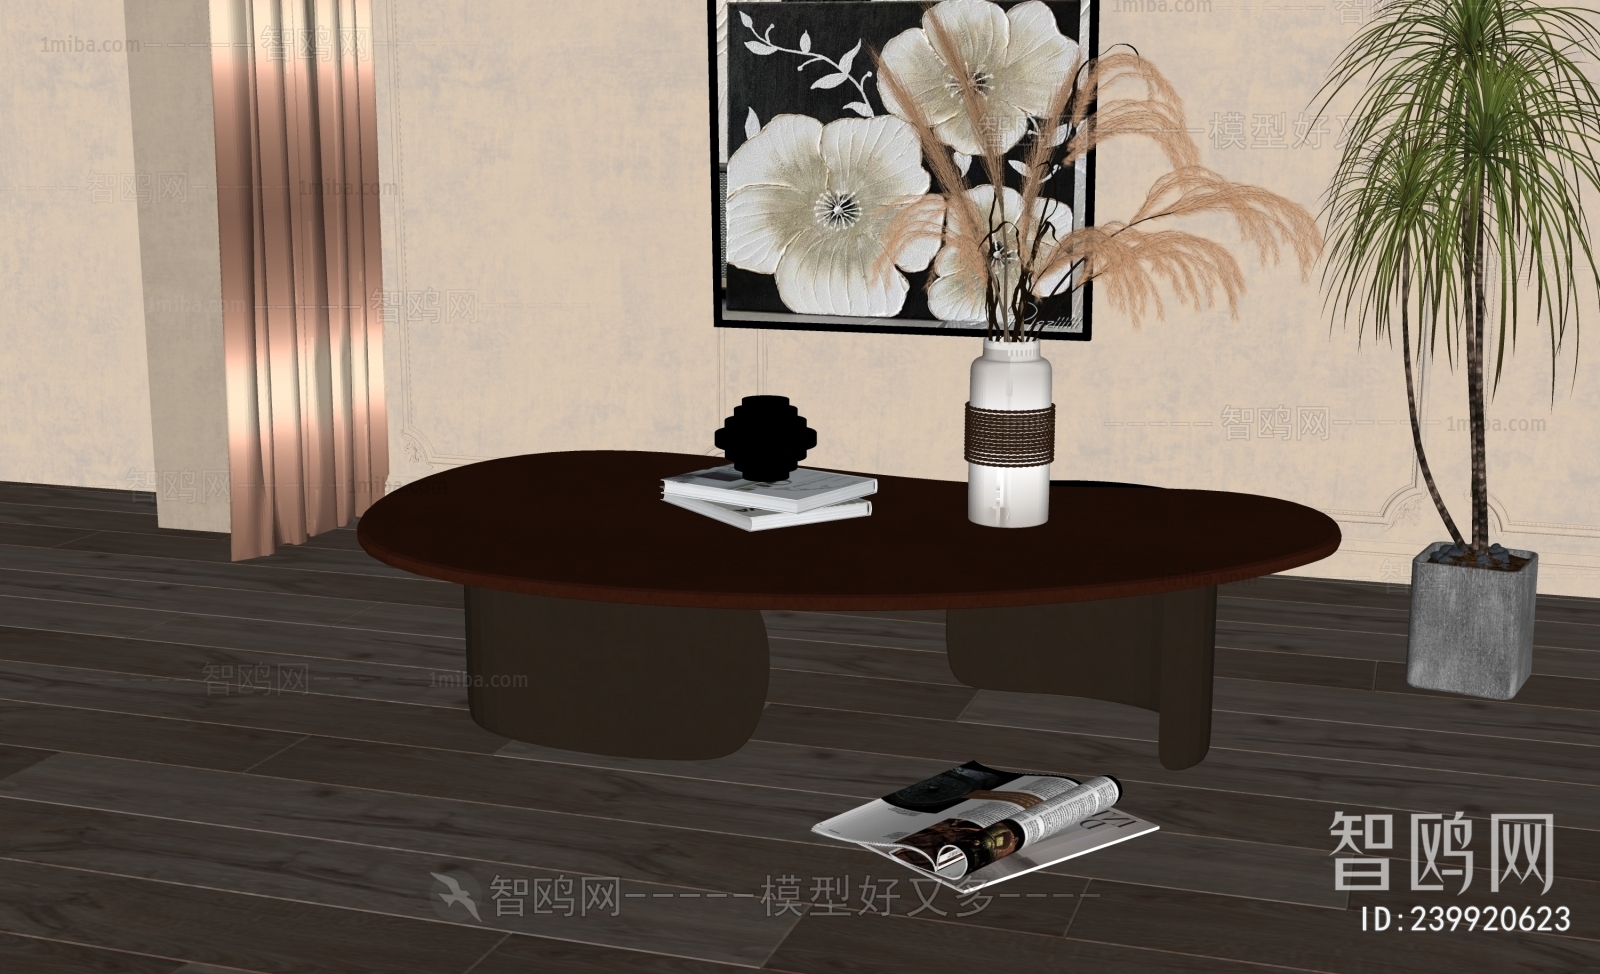 Retro Style Coffee Table